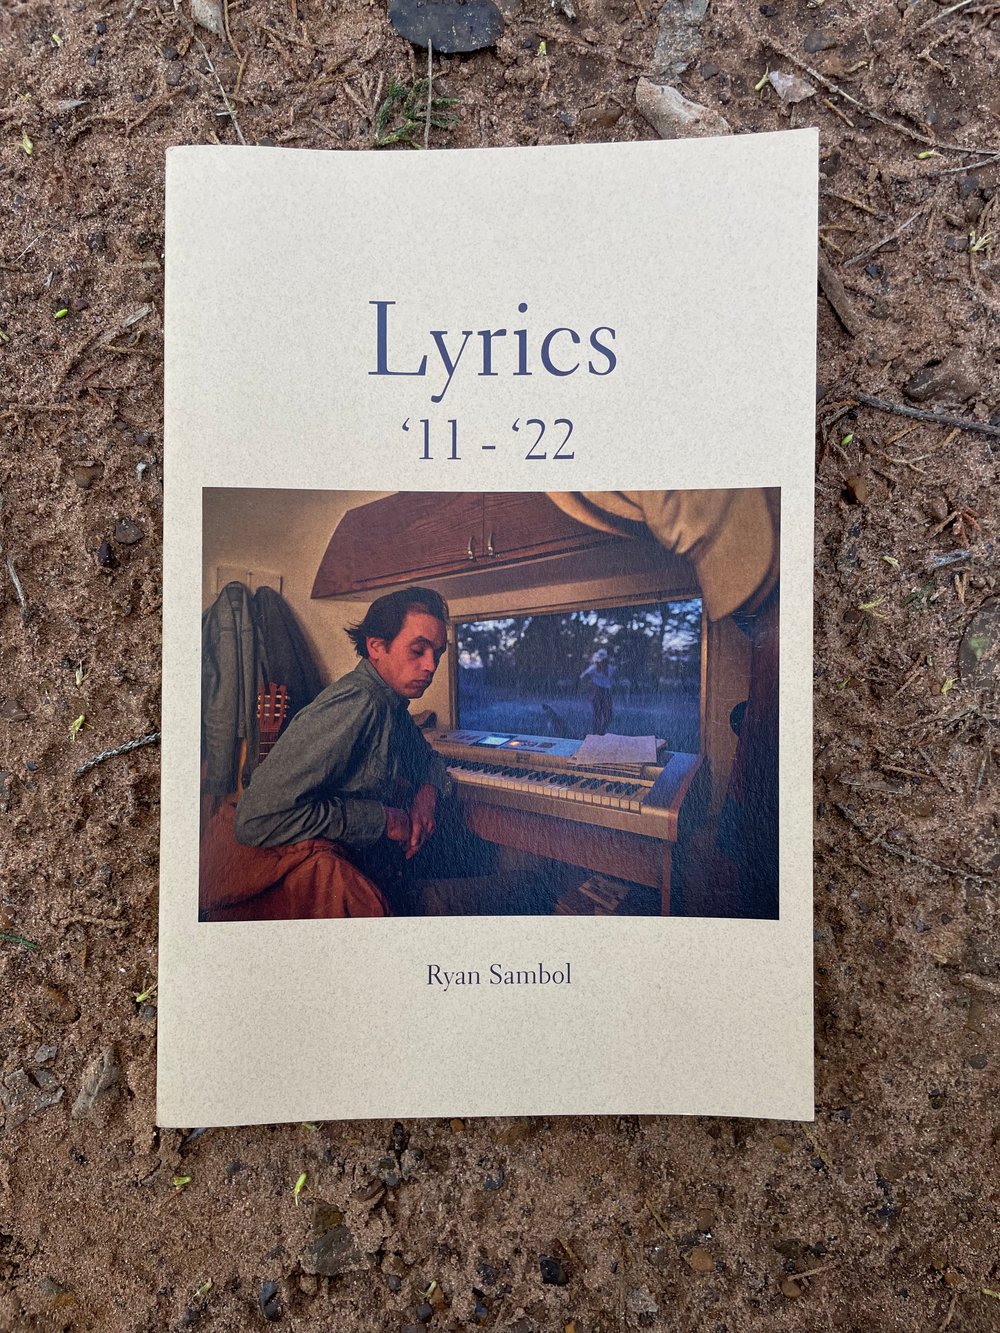 "Lyrics '11 - '22" Softcover Book by Ryan Sambol